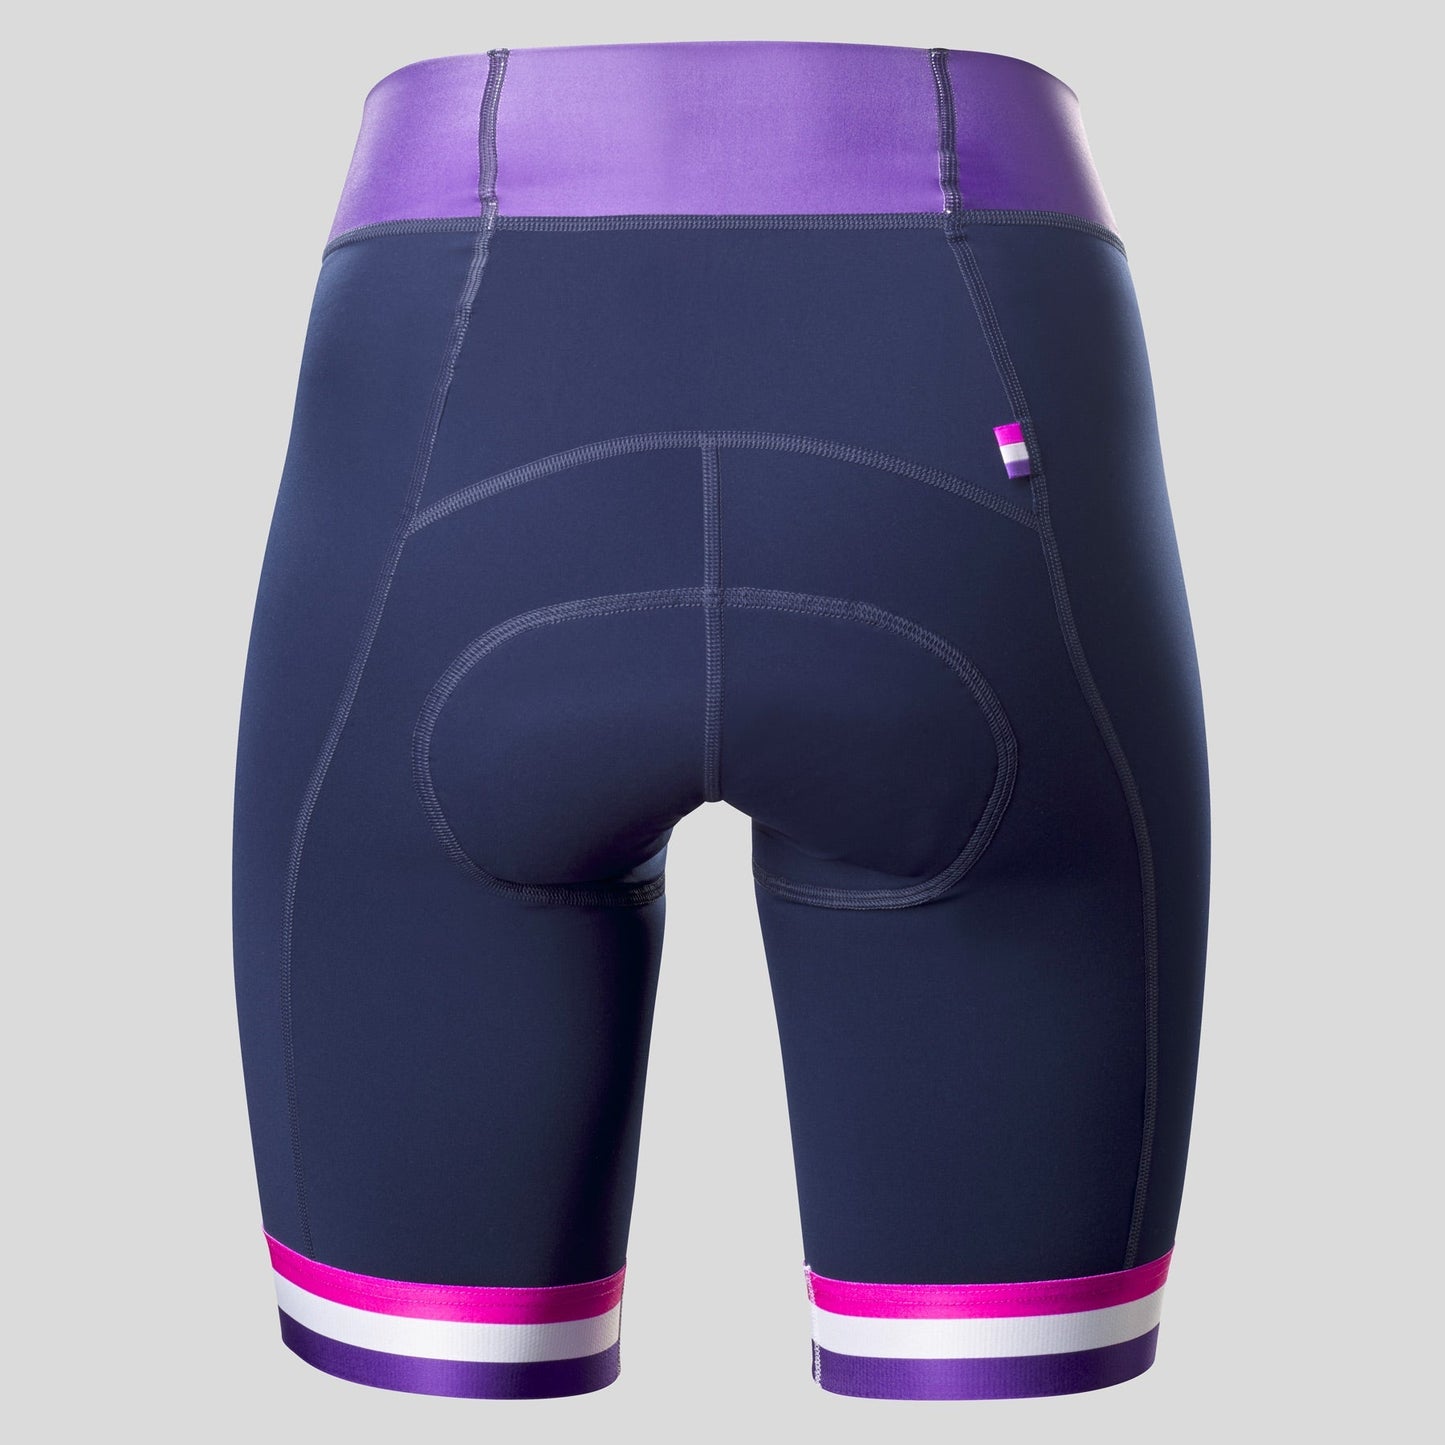 Mercier - Louison shorts Women Mercier shorts 